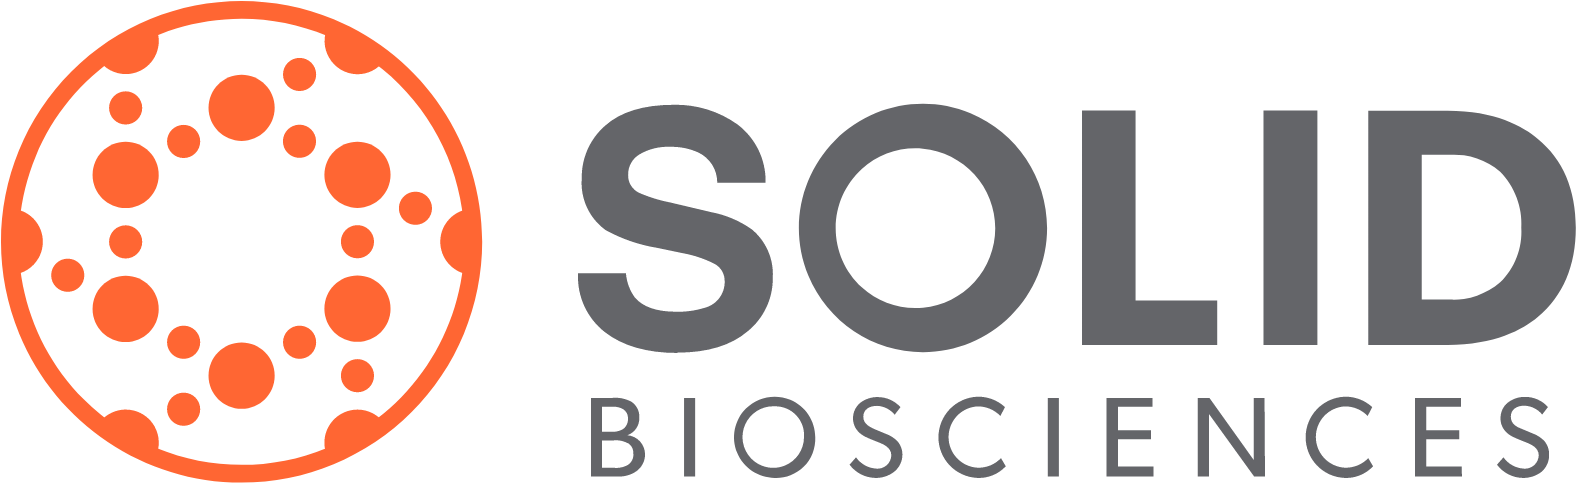 Solid Biosciences
 logo large (transparent PNG)